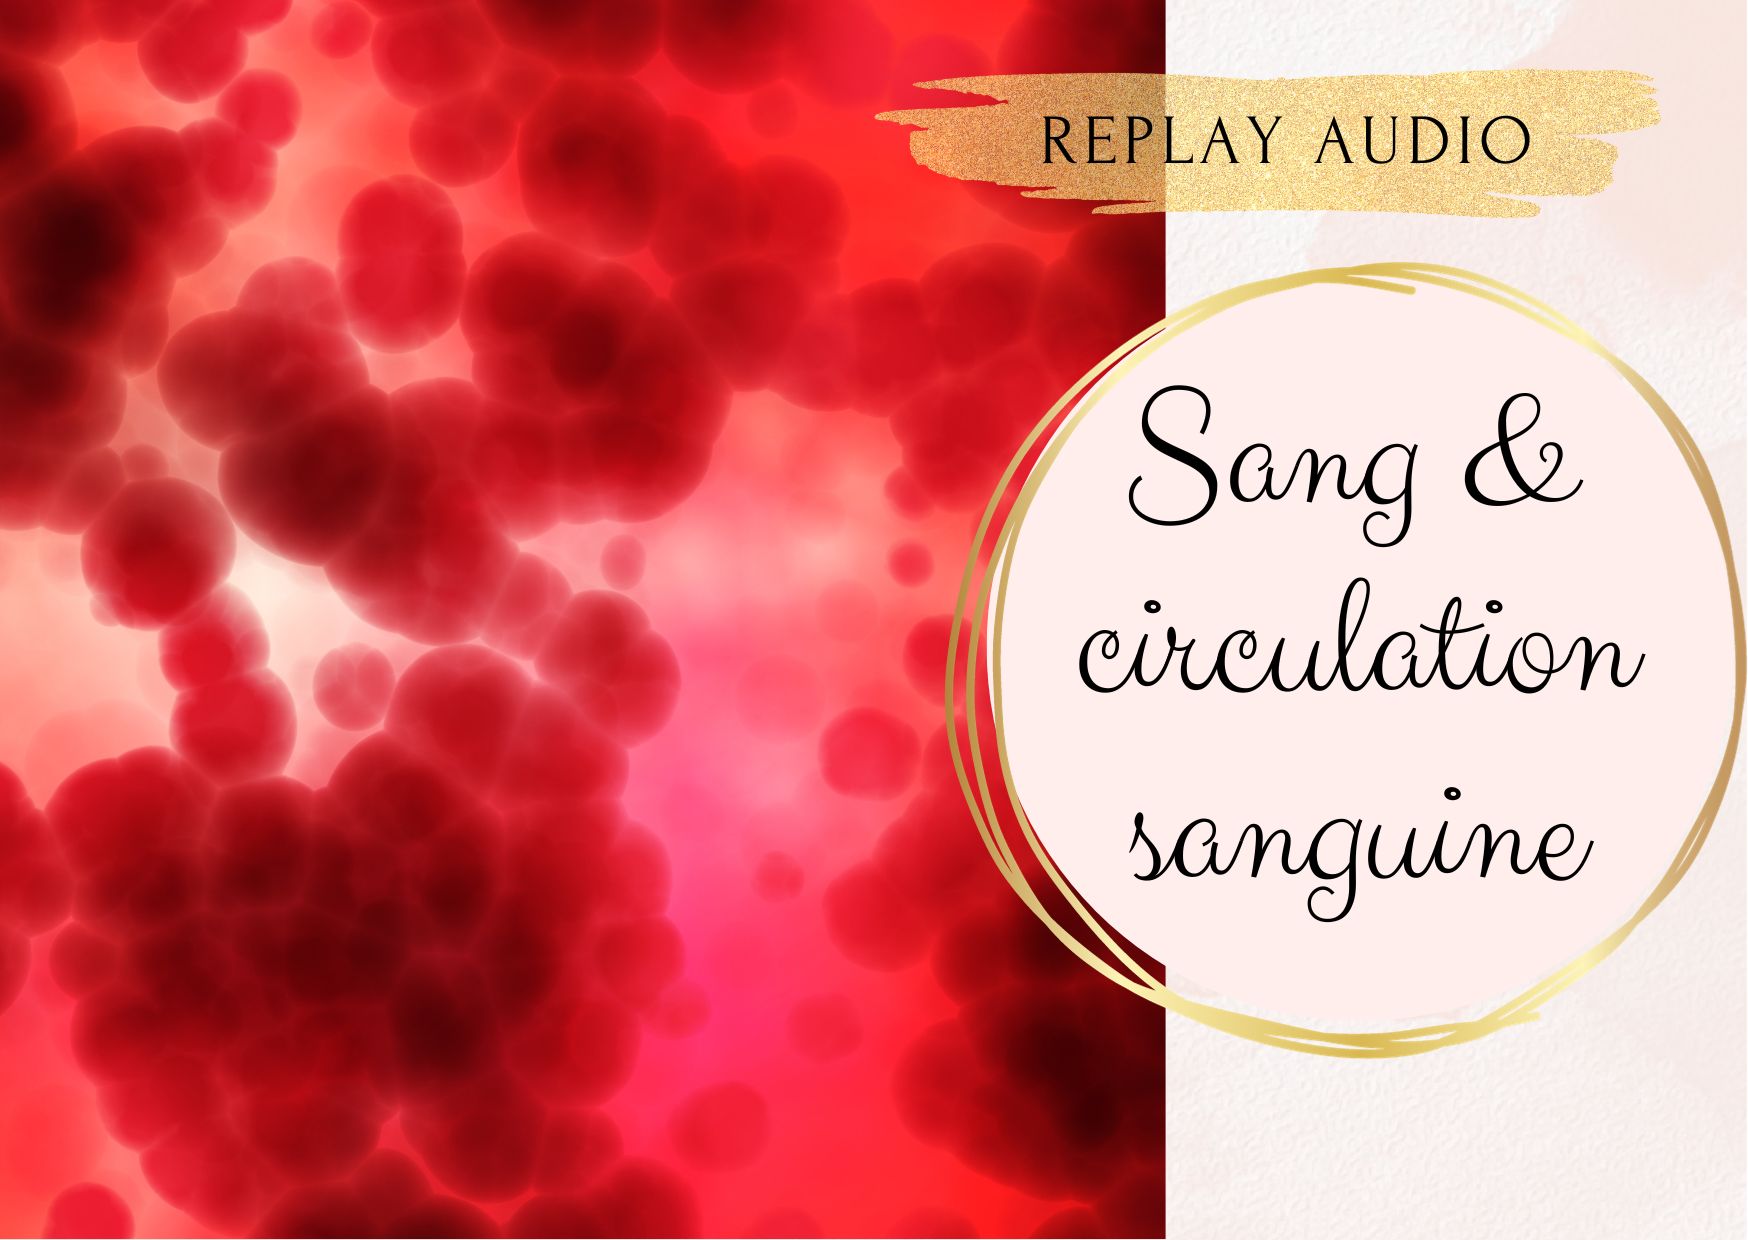 Soin "Sang et circulation sanguine" - audio